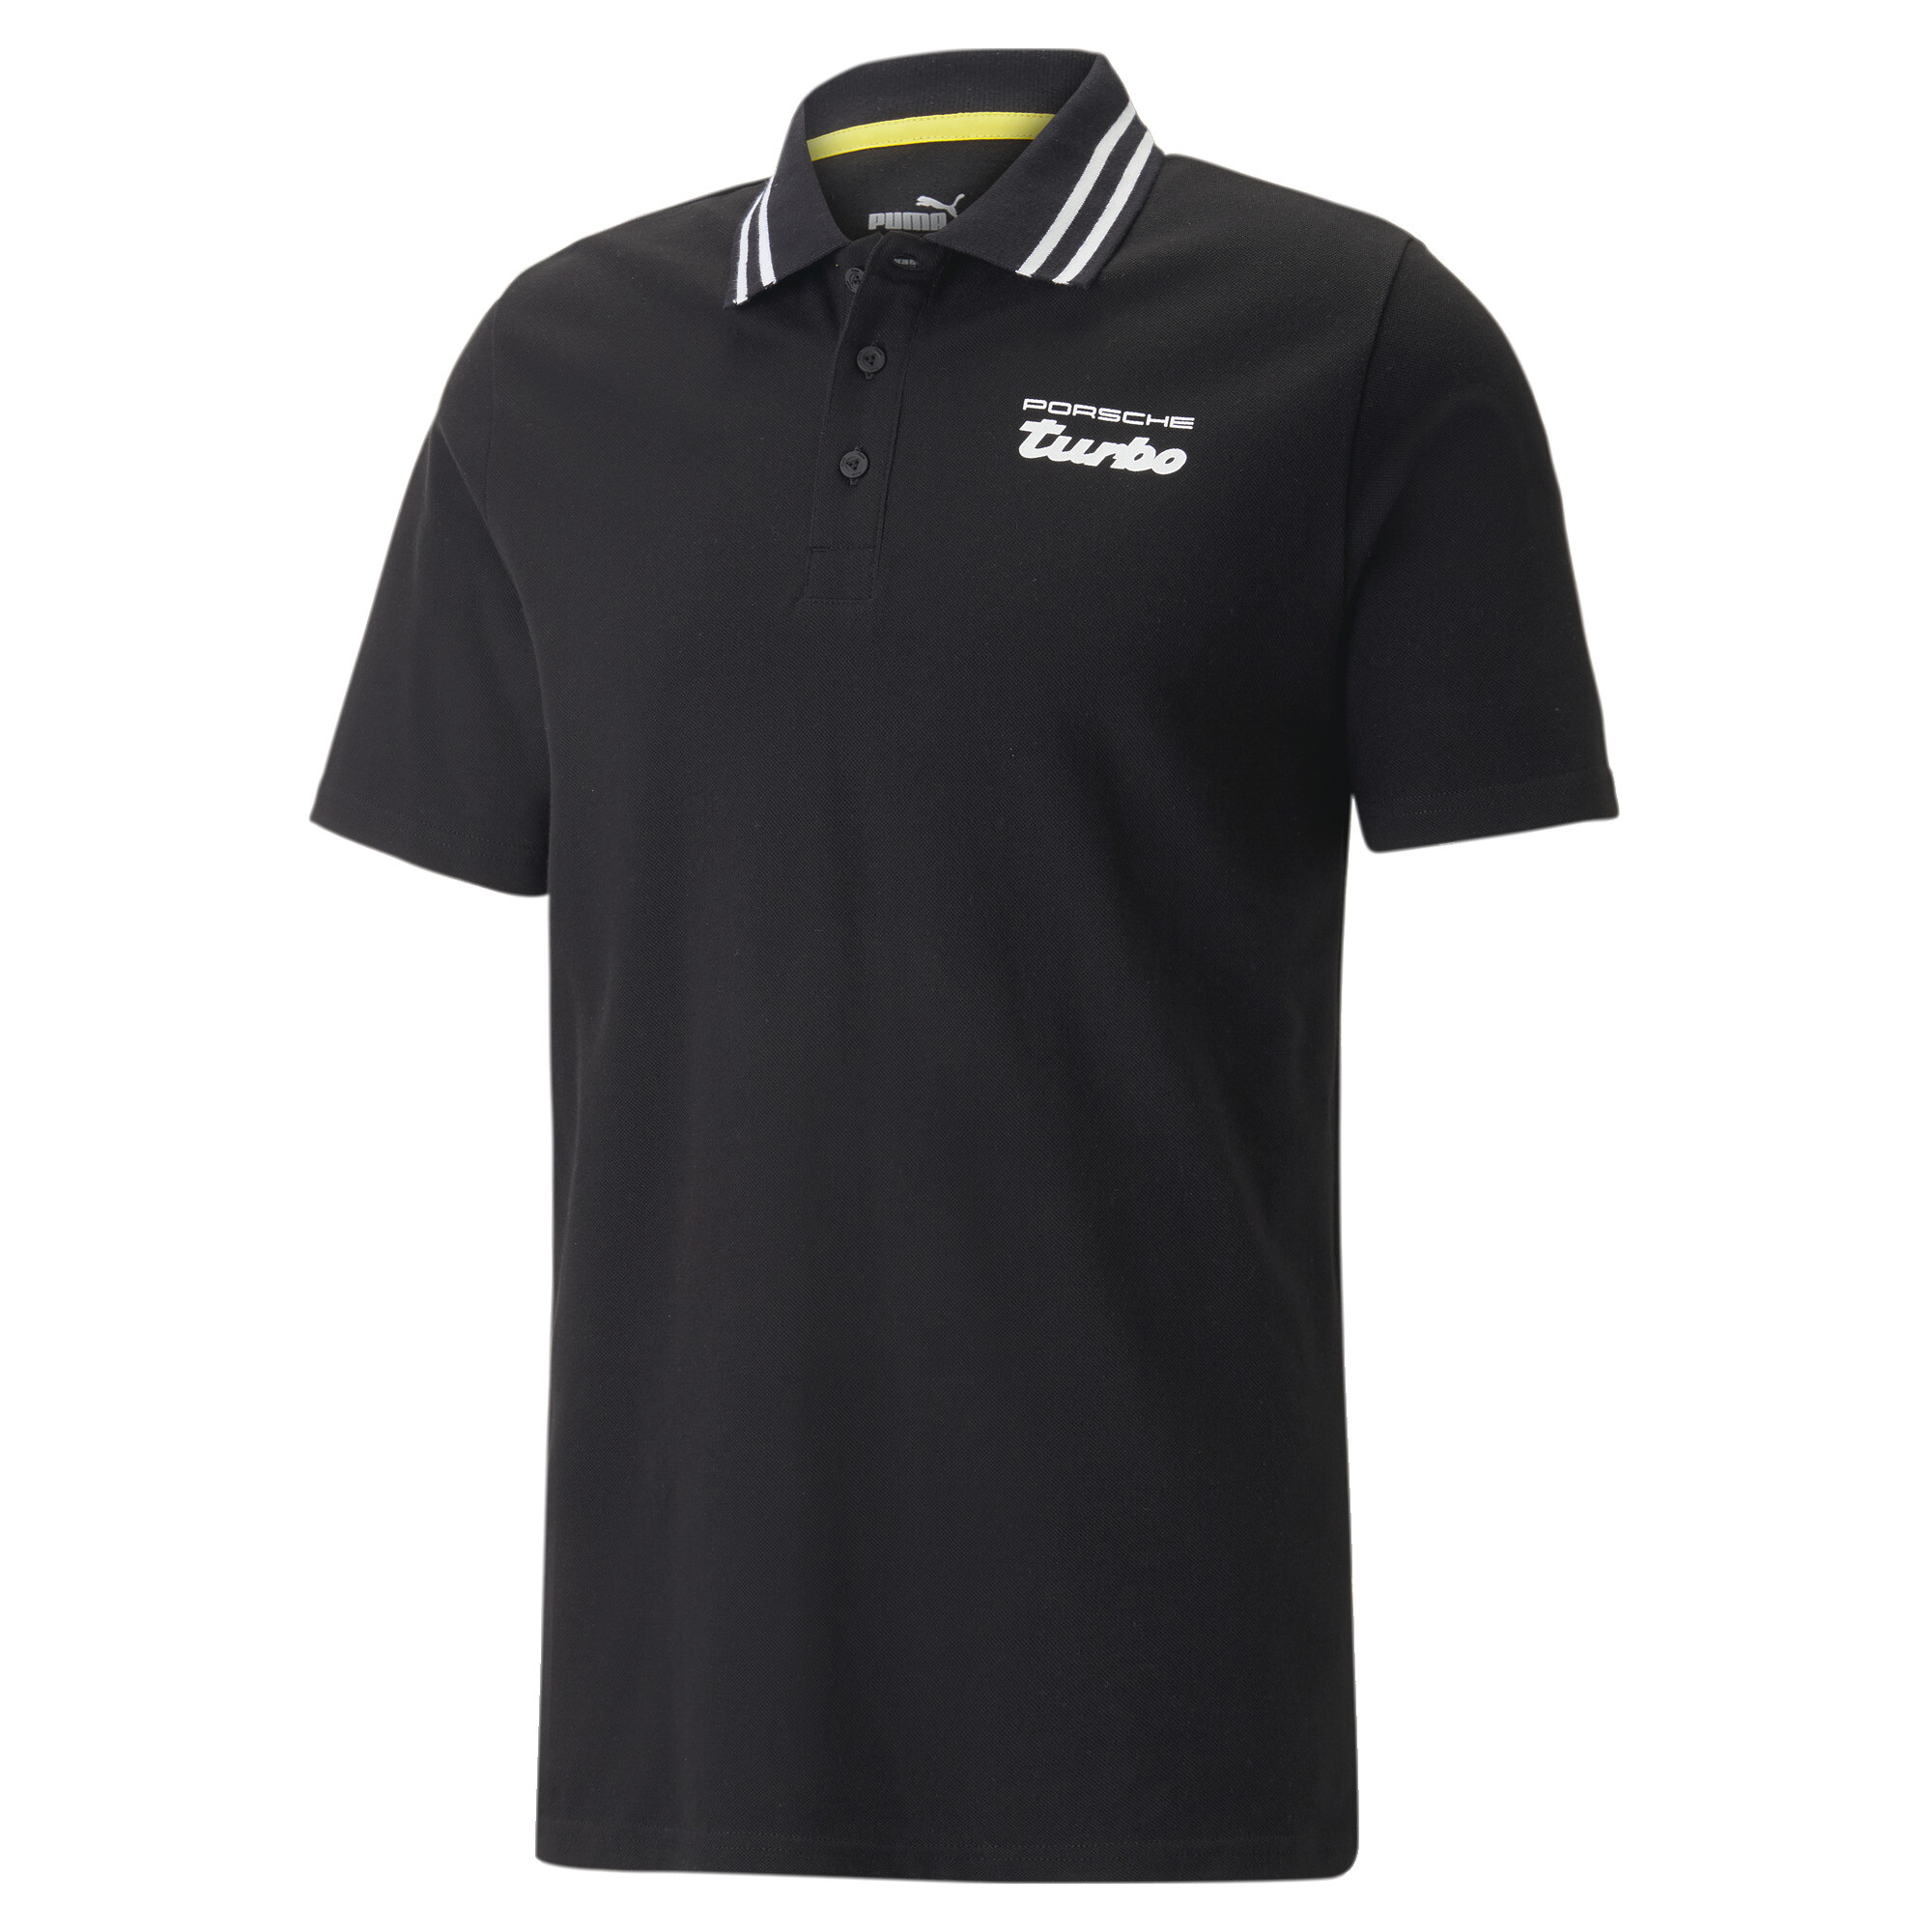 Men's PUMA Porsche Legacy Polo Shirt Men In Black, Size Large